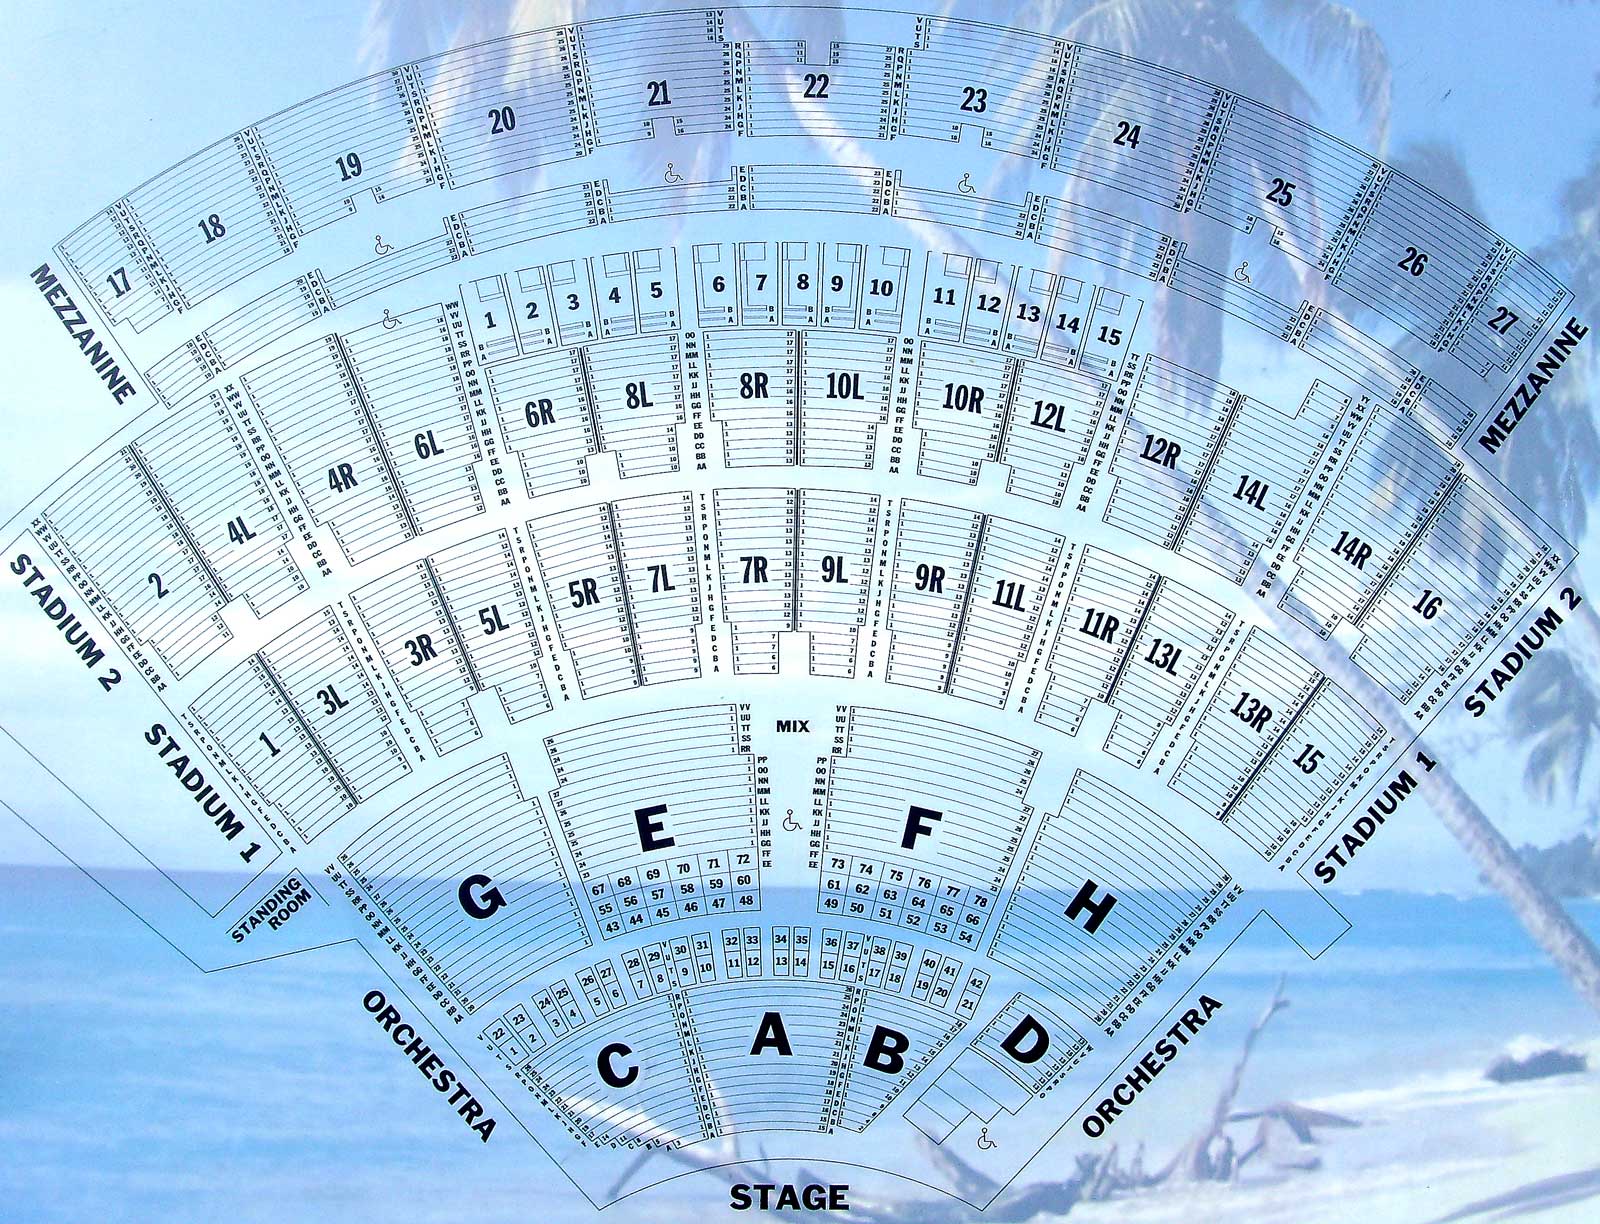 Nikon Jones Beach Theater Seating Chart